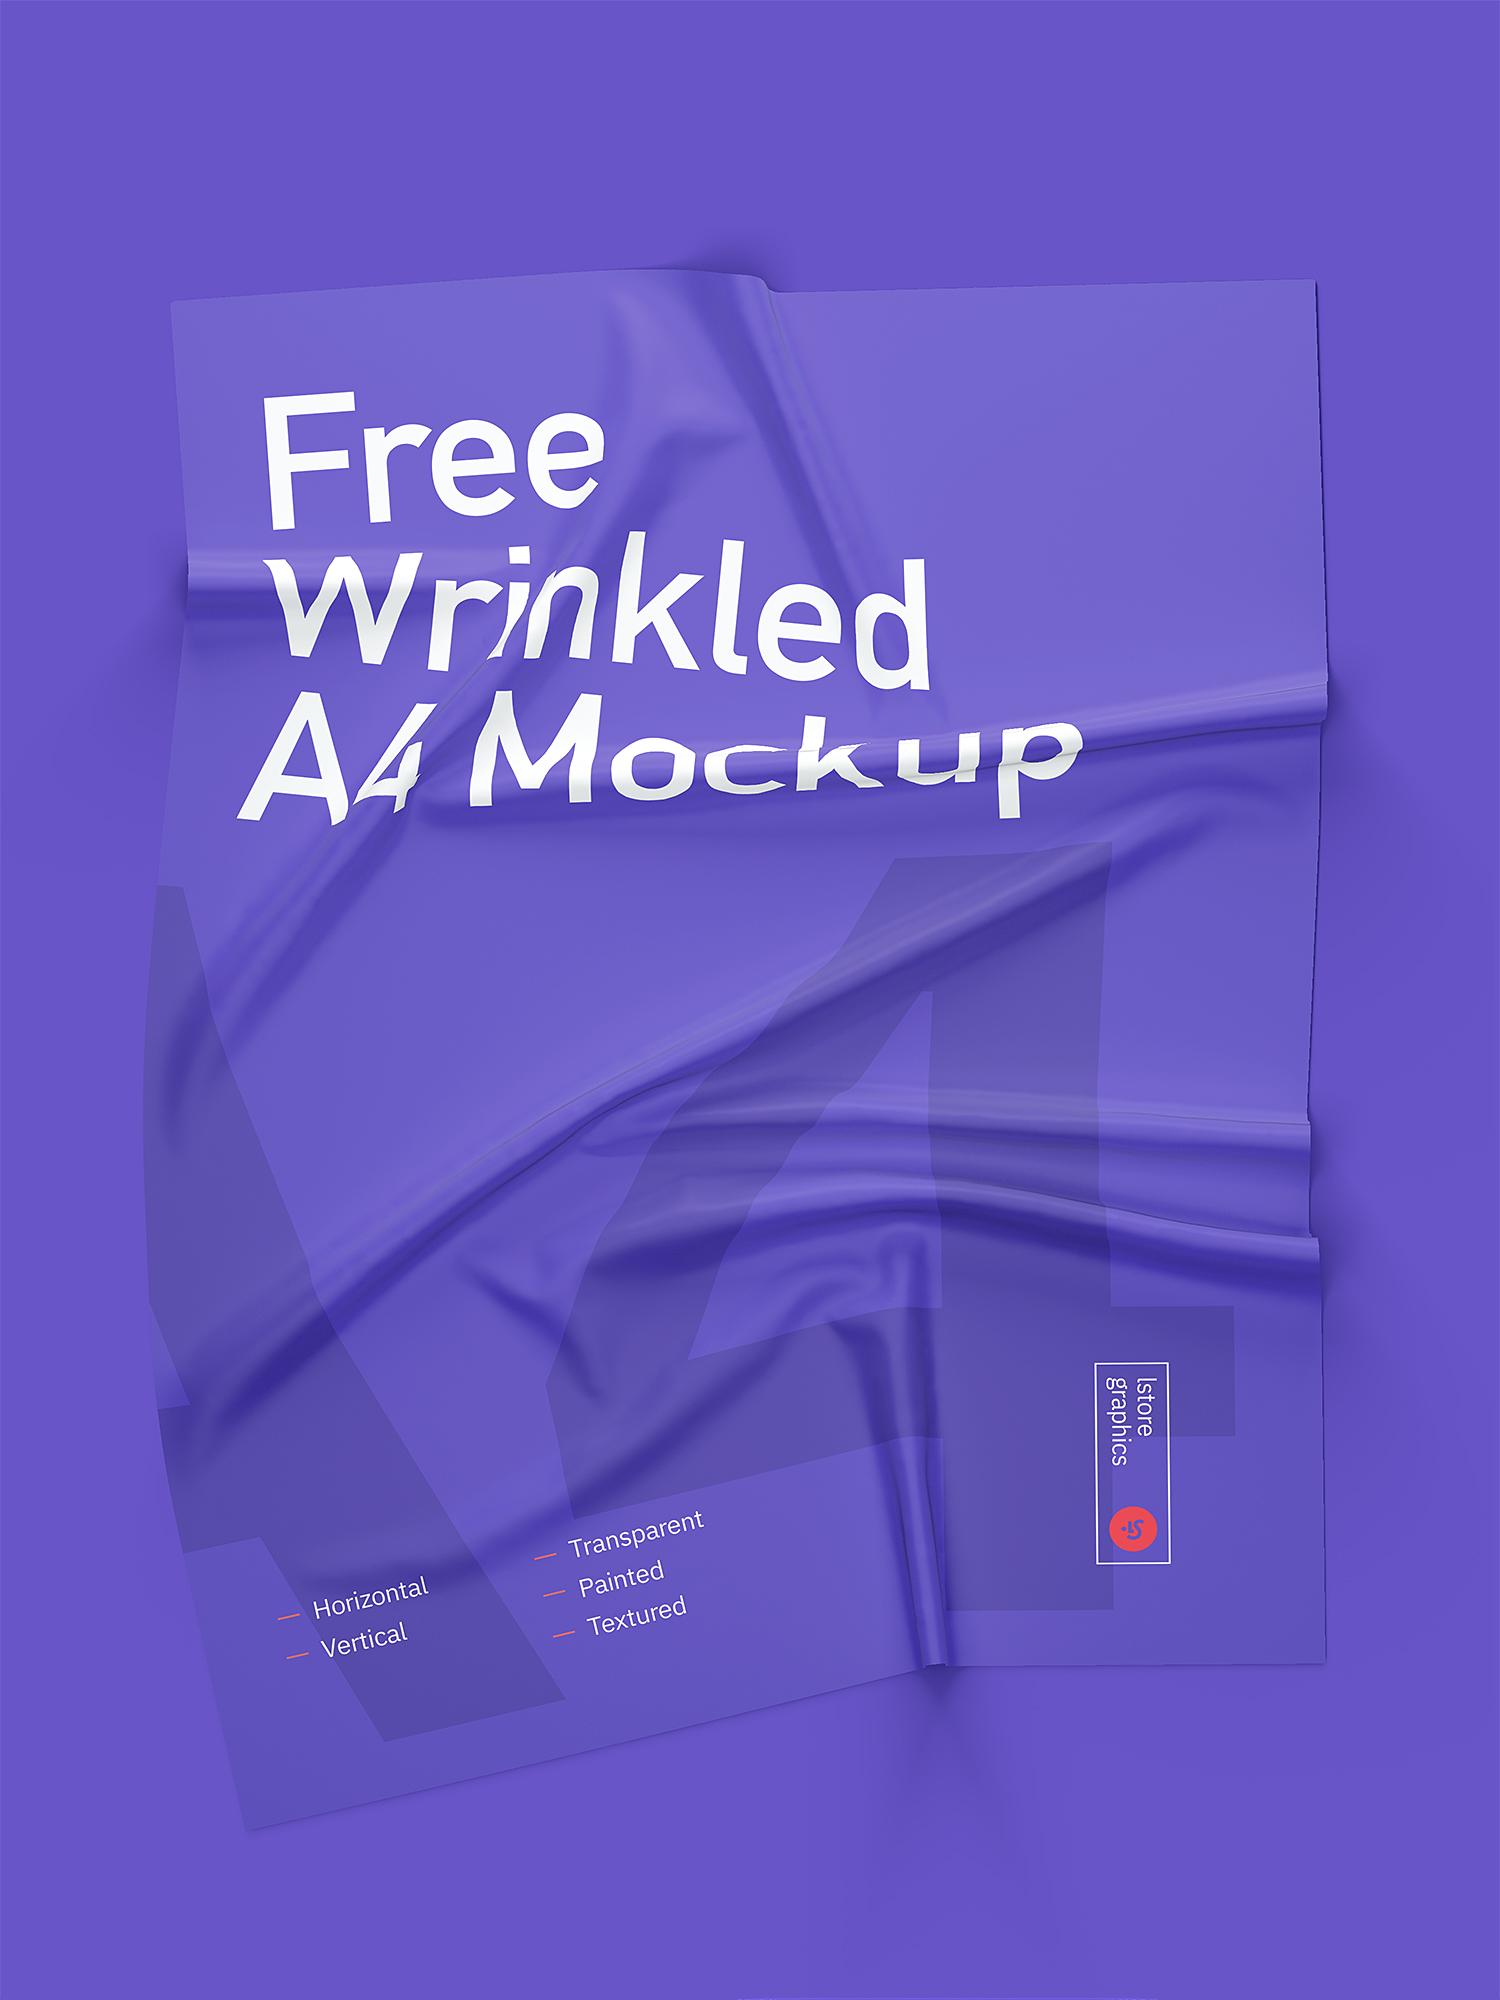 Free-Wrinkled-A4-Mockup-02